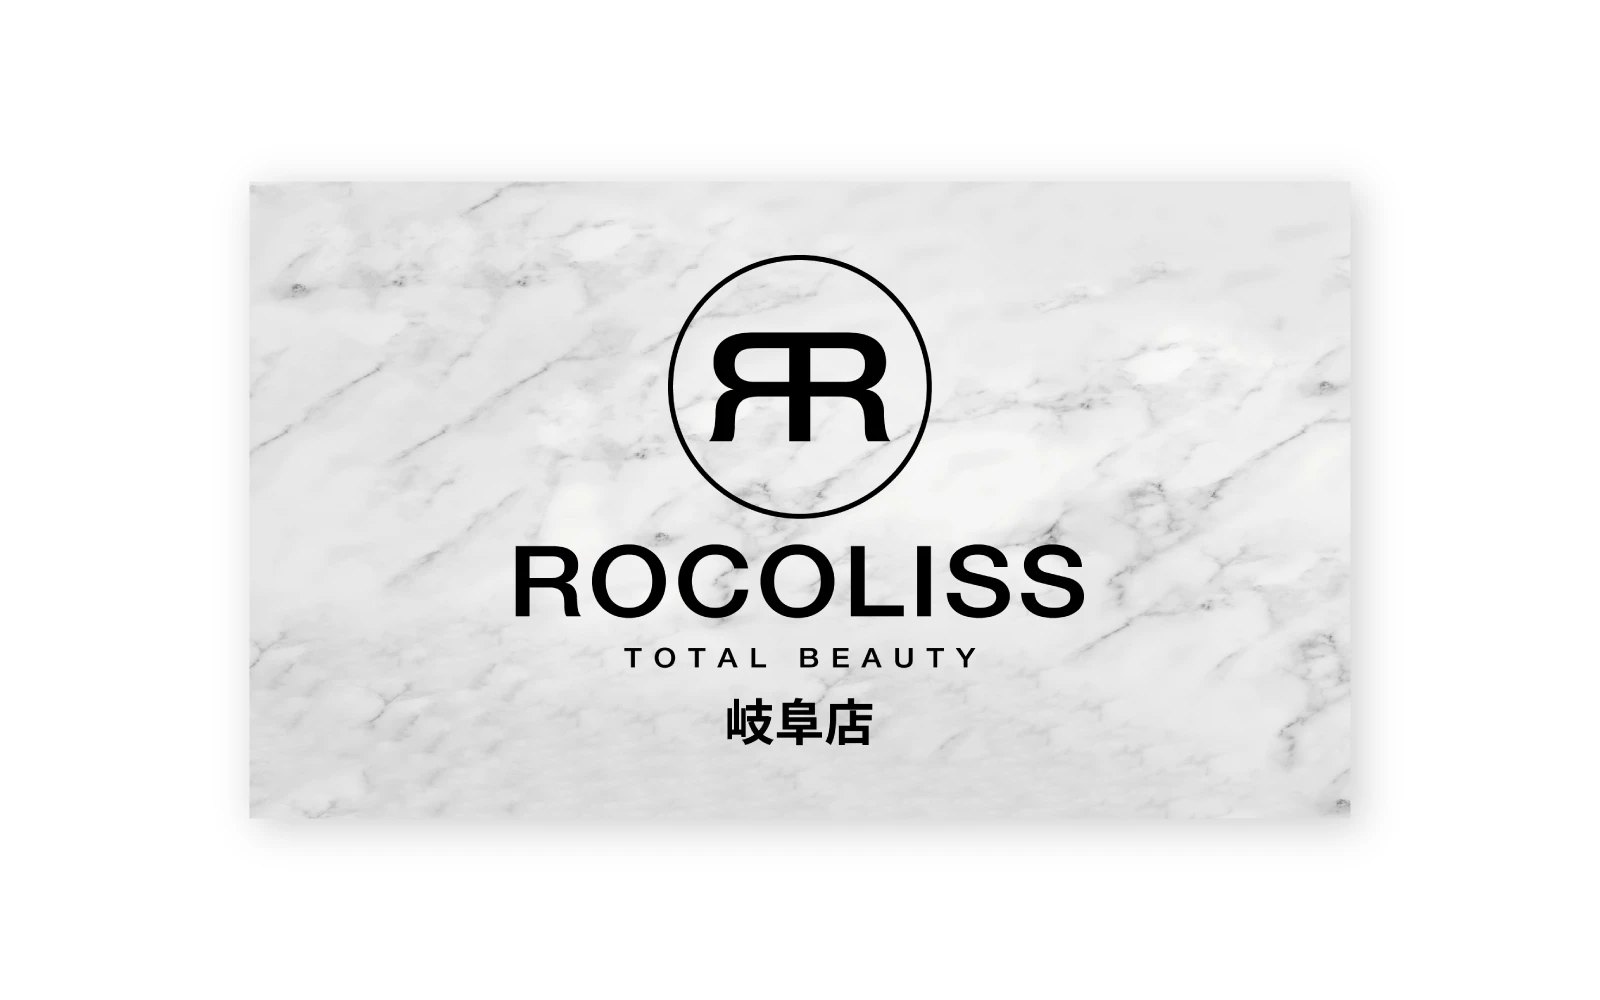 ROCOLISS TOTAL BEAUTY / 岐阜店店舗装飾デザイン